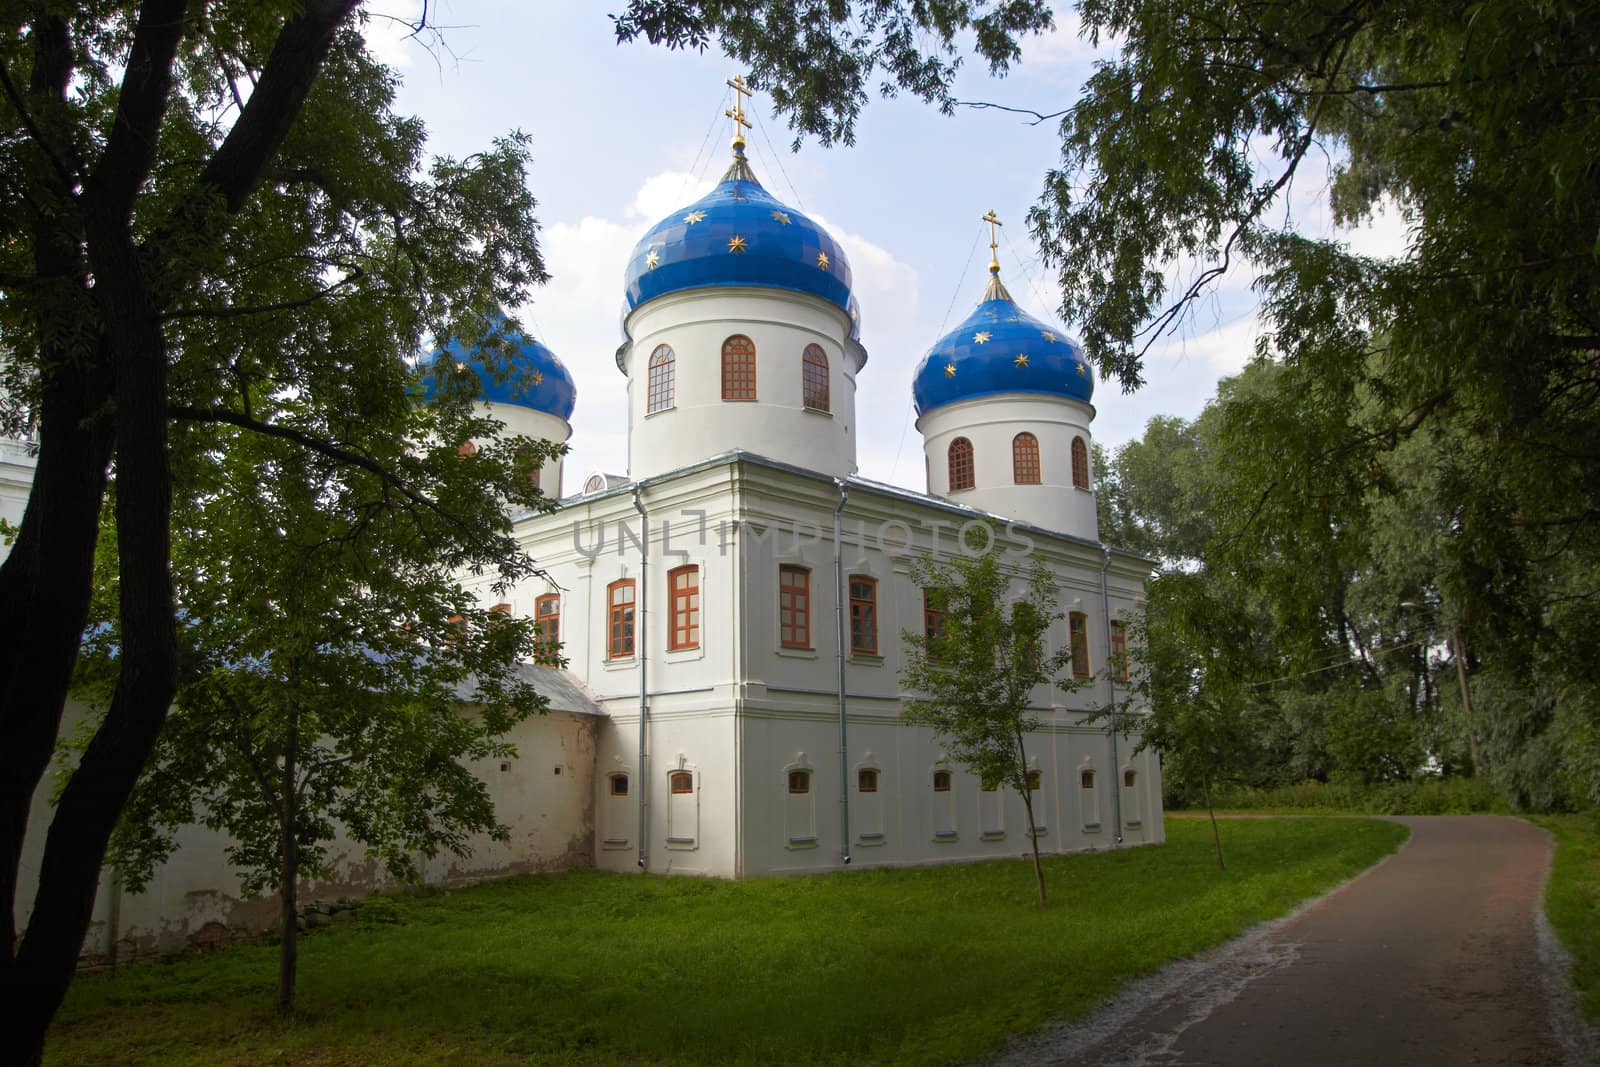 Russian Orthodox church of Juriev monastery in the trees. Novgoro, Russia